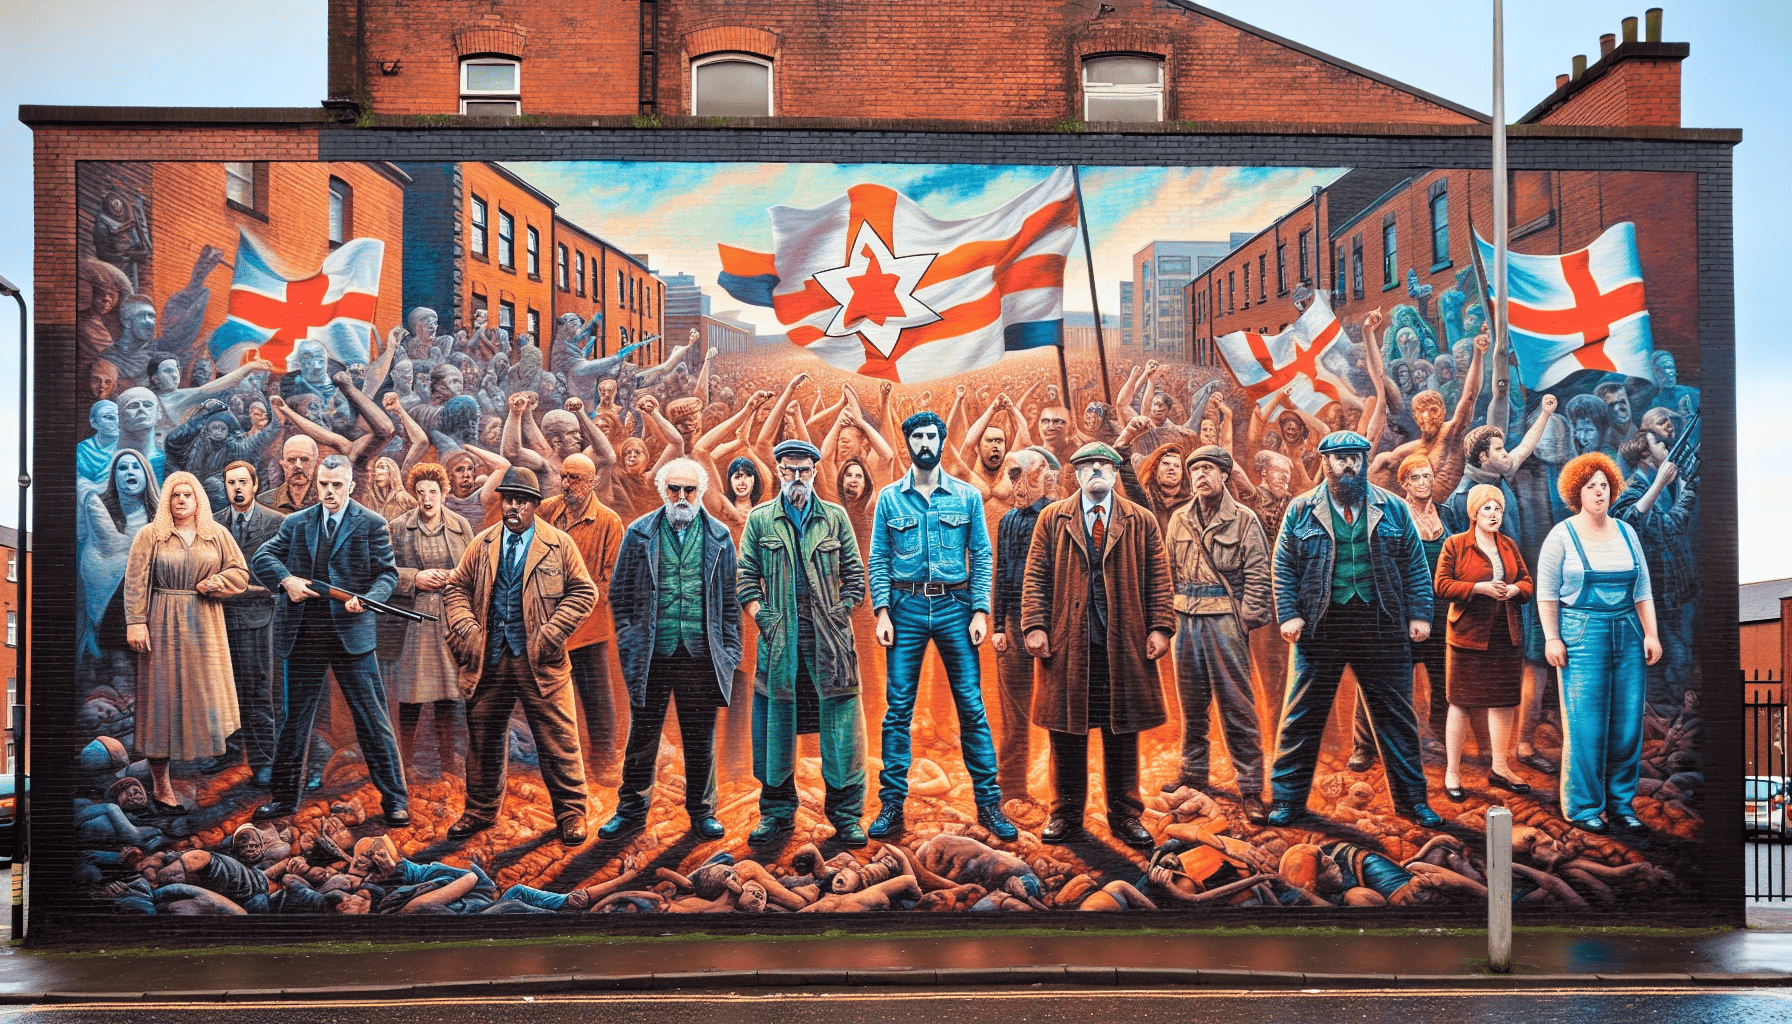 Loyalist mural on Shankill Road portraying triumph and martyrdom